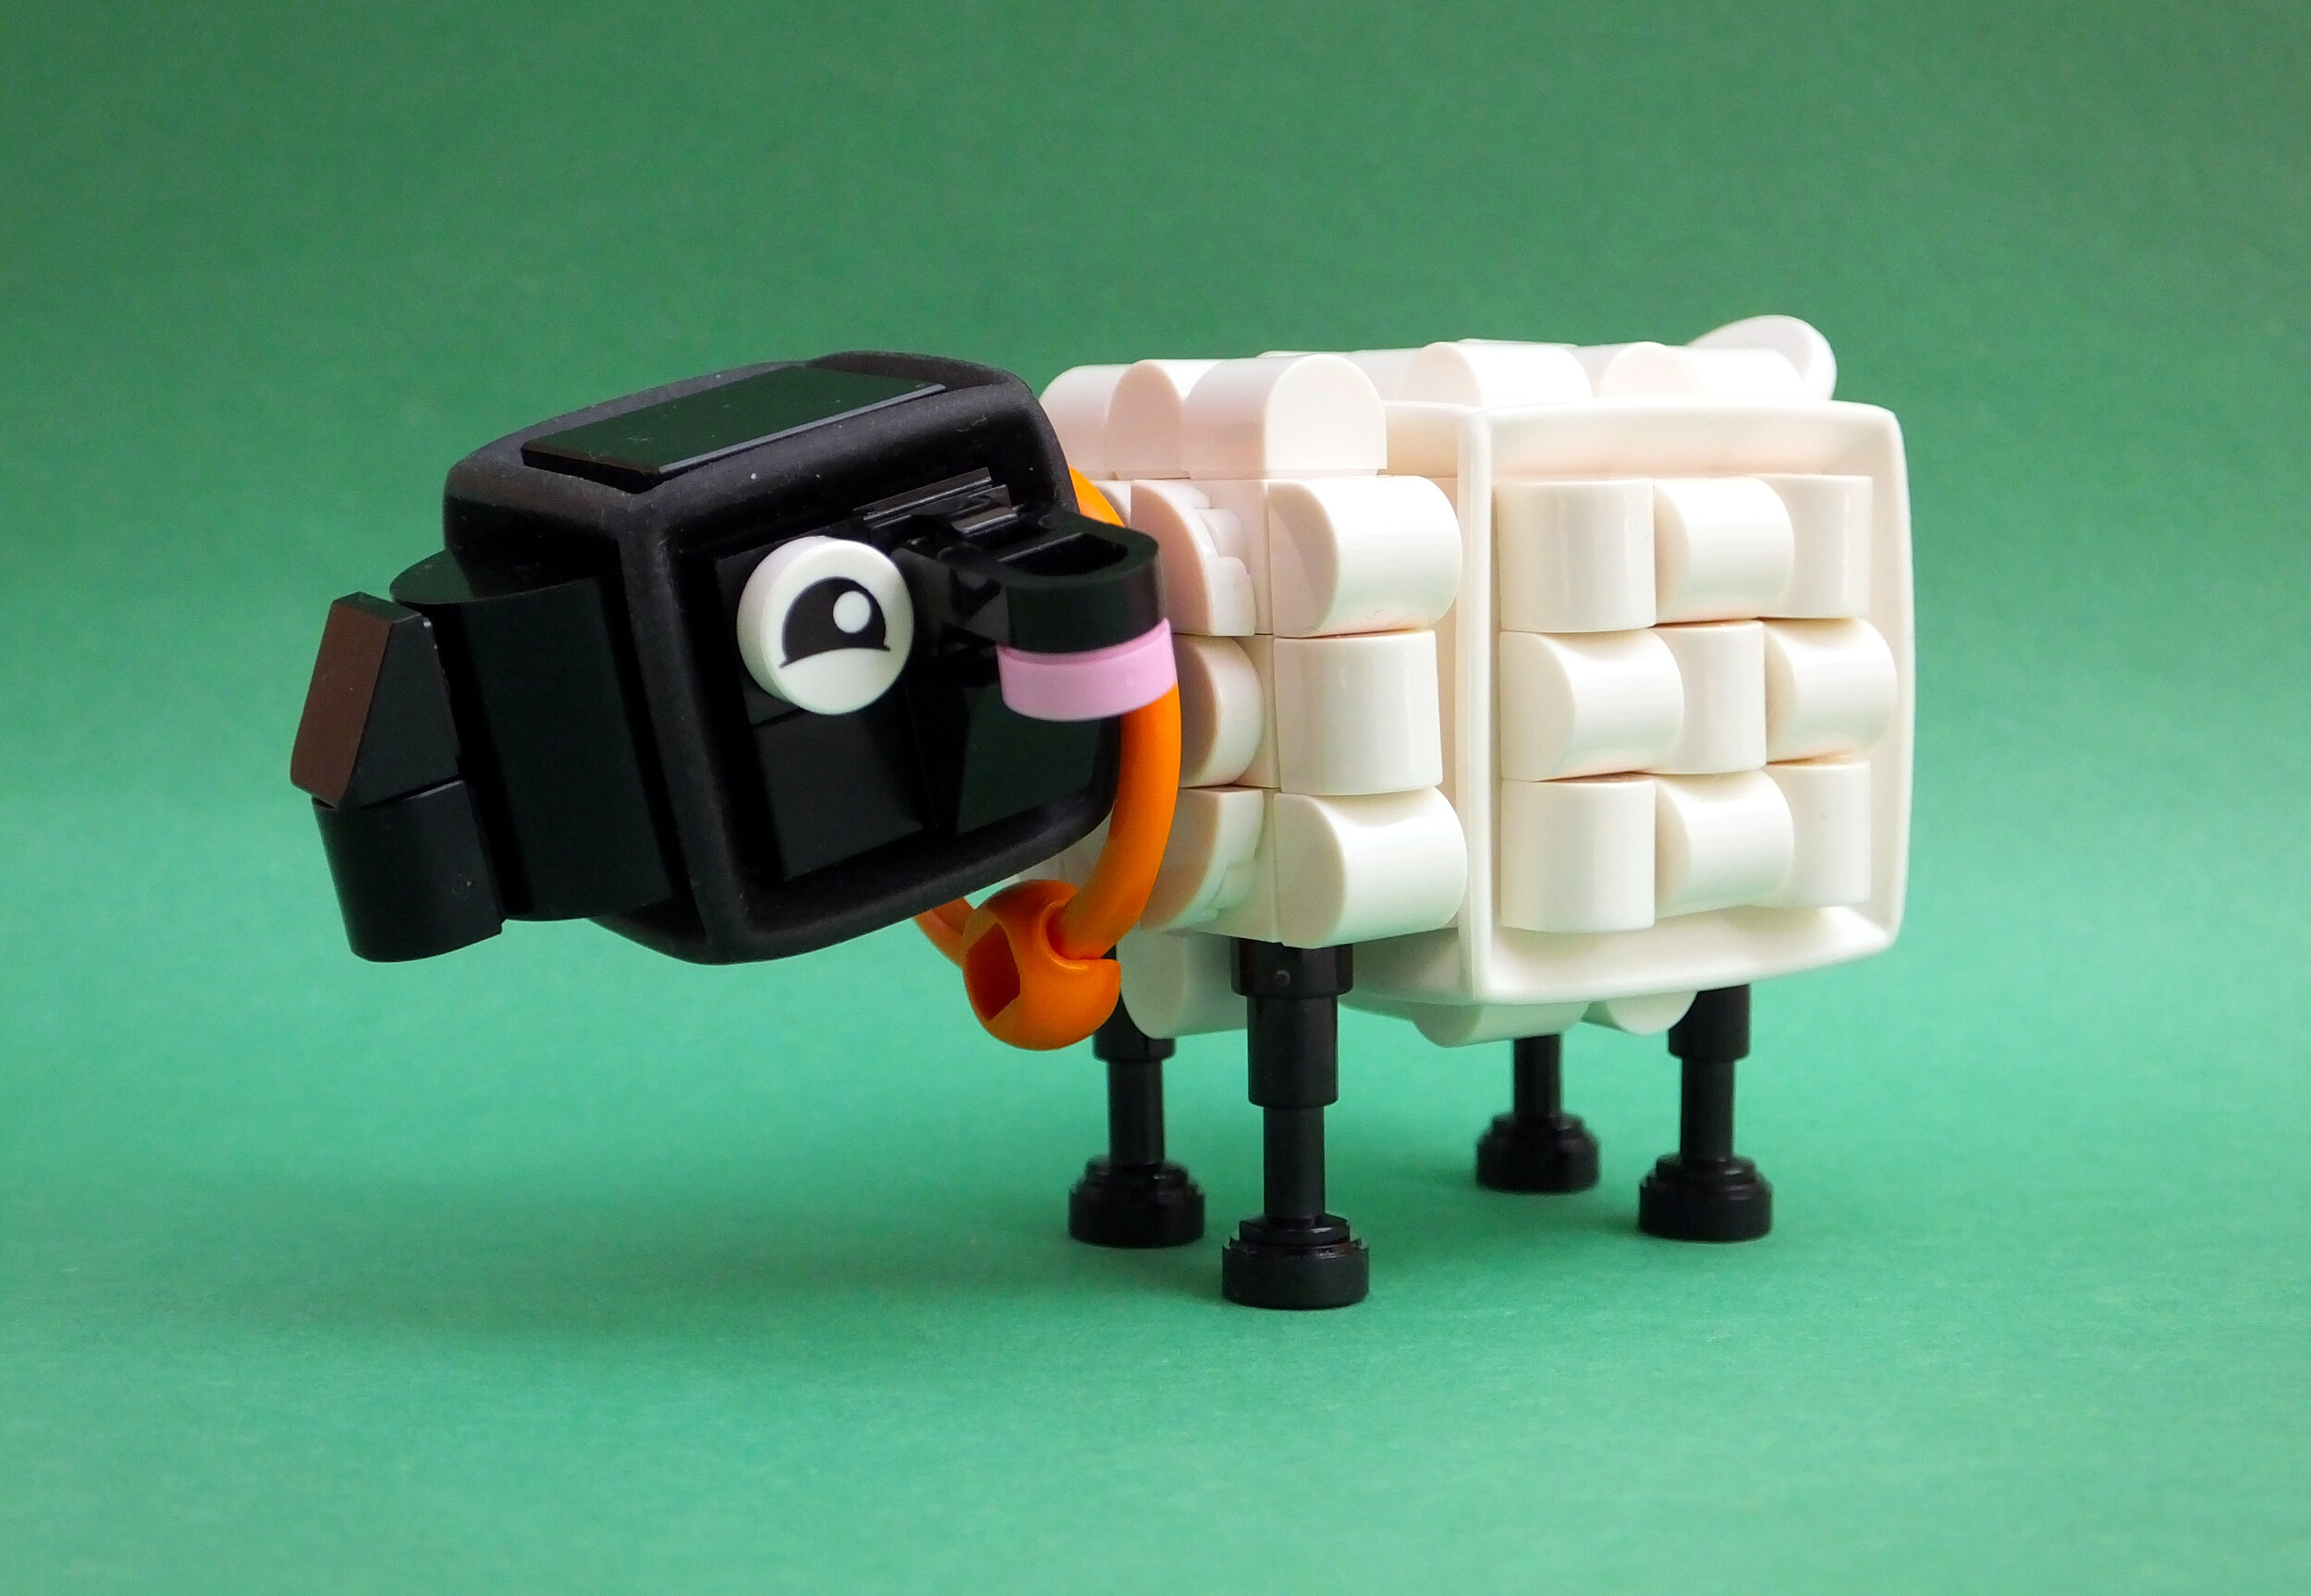 Cube Sheep - Jason Meyer